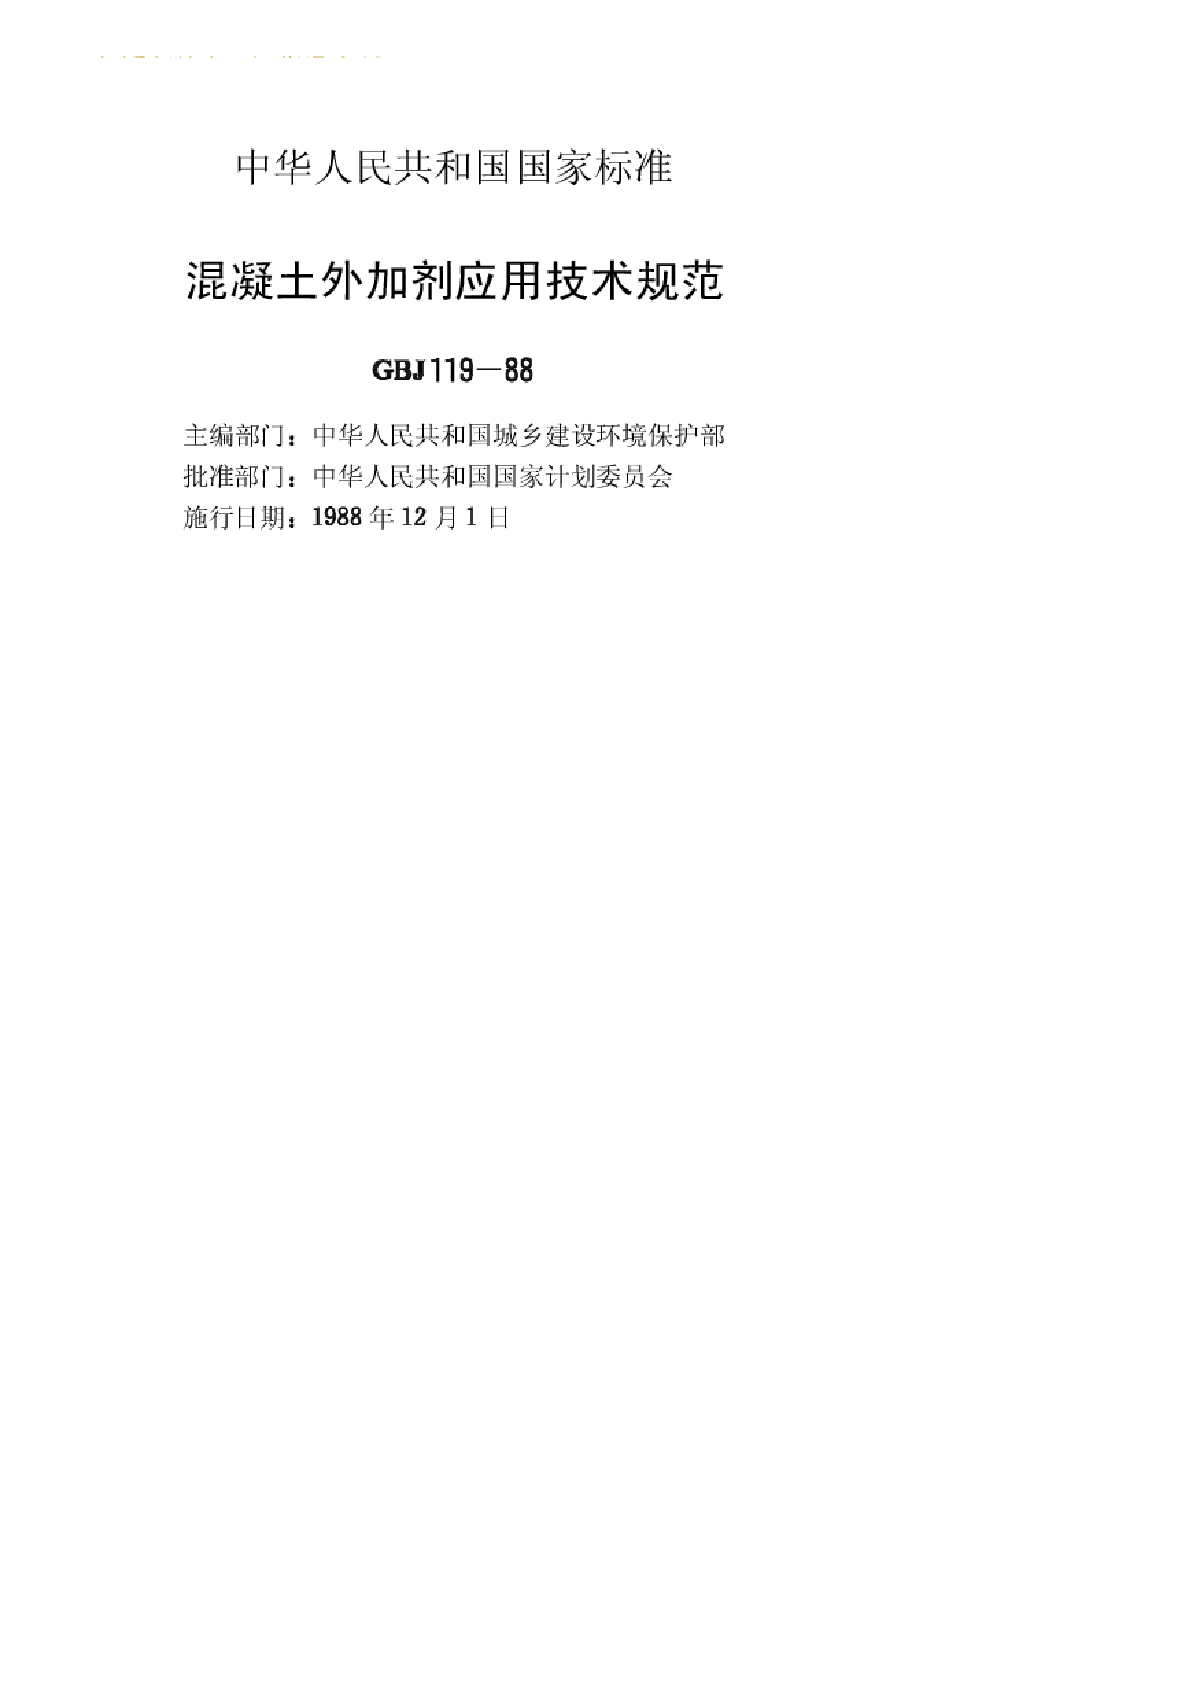 GBJ 119 1988 混凝土外加剂应用技术规范.pdf-图二